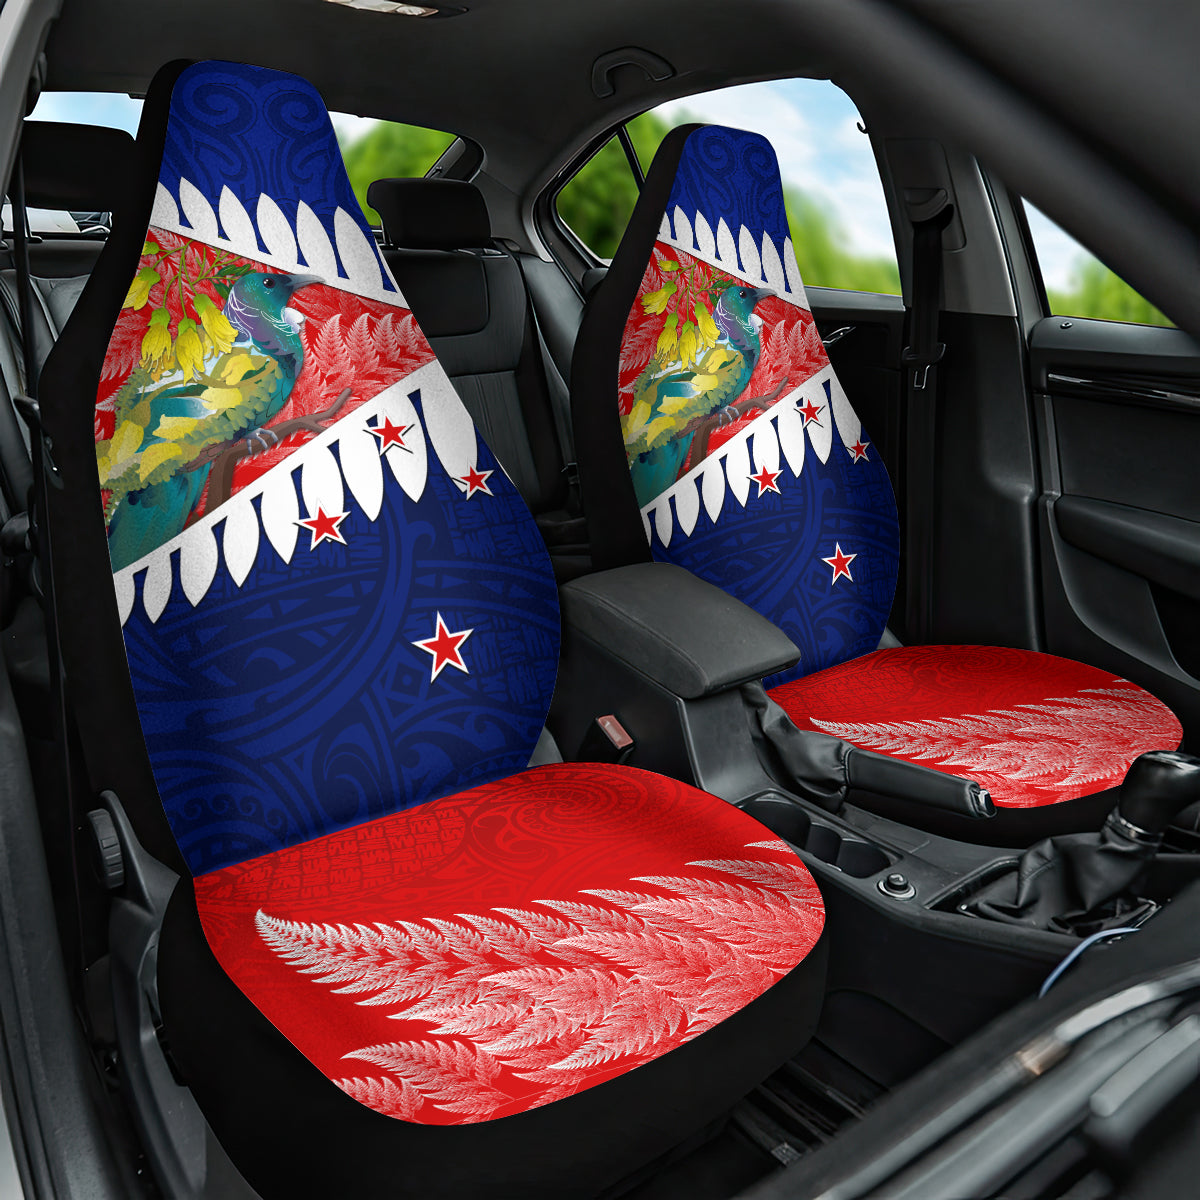 New Zealand Waitangi Day Car Seat Cover NZ Maori Tui Bird With Kowhai Flowers LT14 One Size Blue - Polynesian Pride